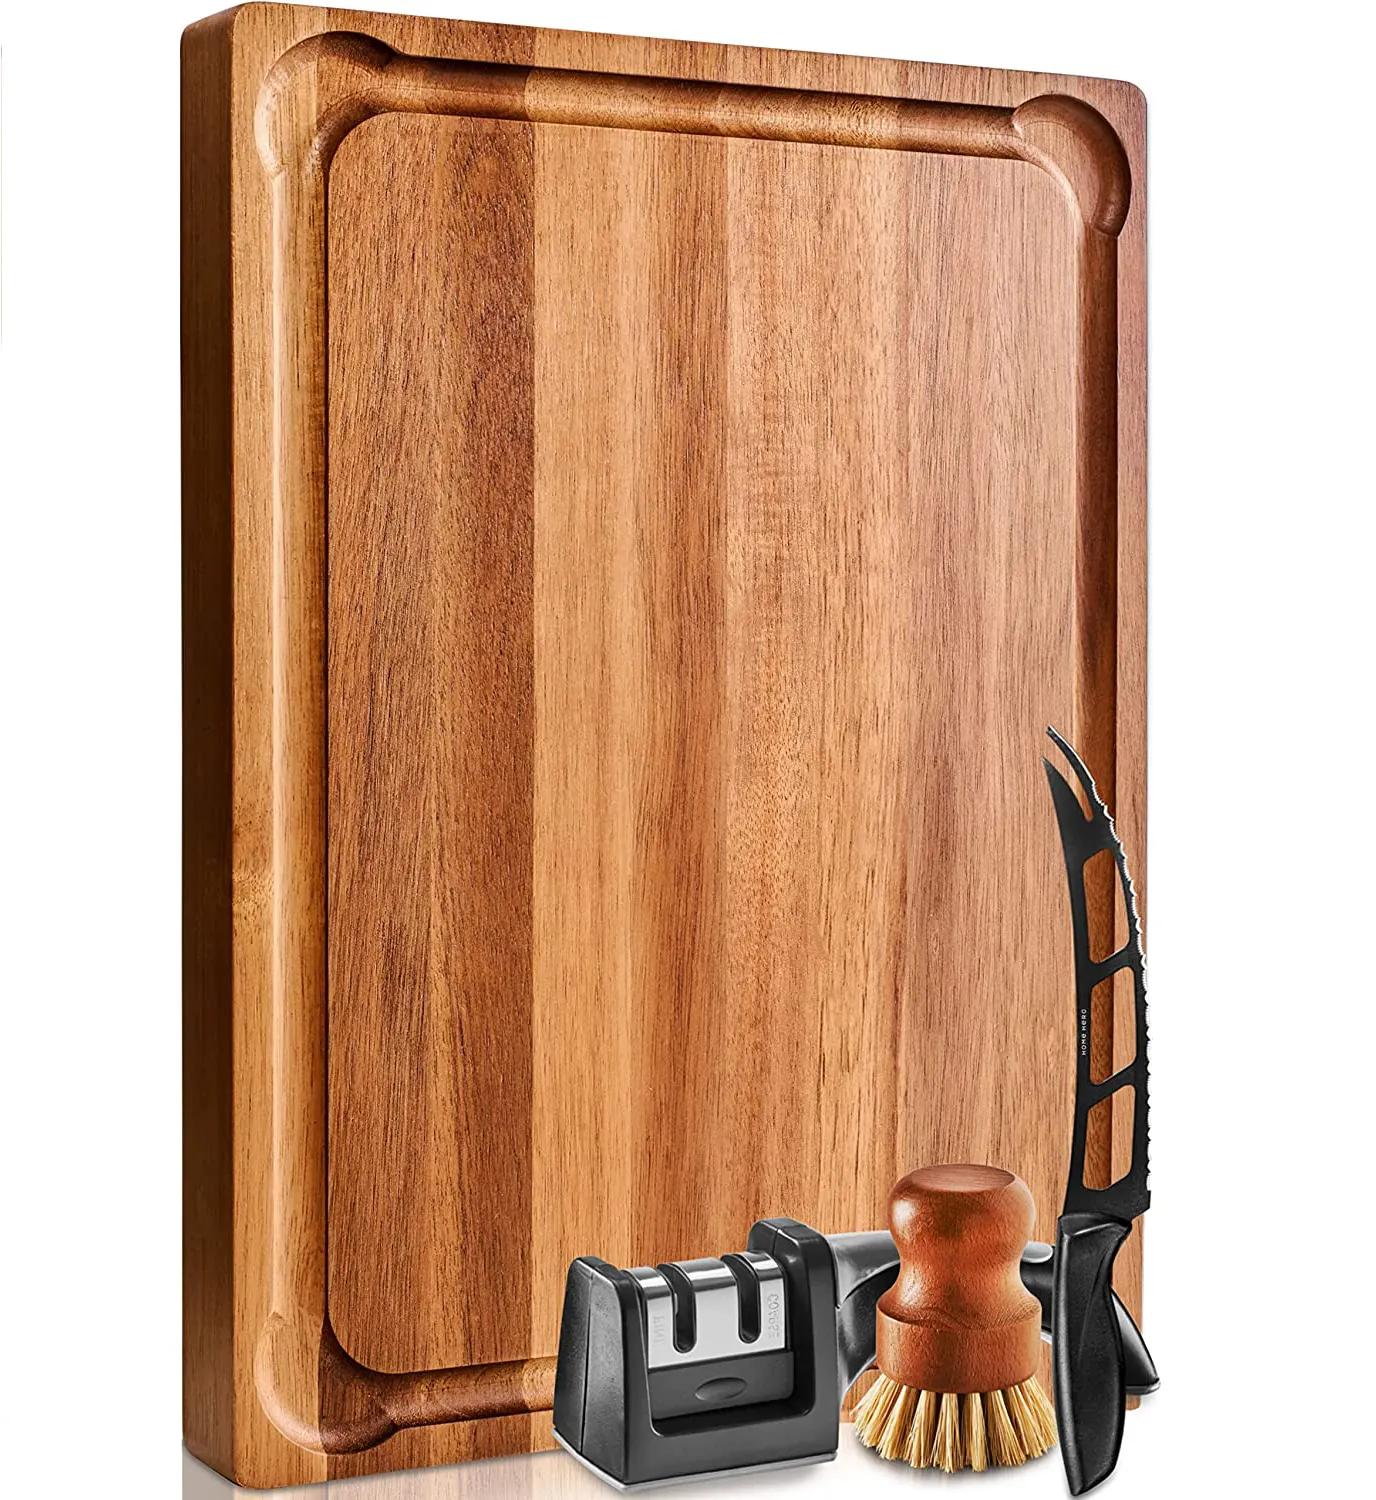 उच्च गुणवत्ता वाले कस्टम बड़े लकड़ी काटने वाले बोर्ड बहुउद्देशीय रसोई चॉपिंग बोर्ड